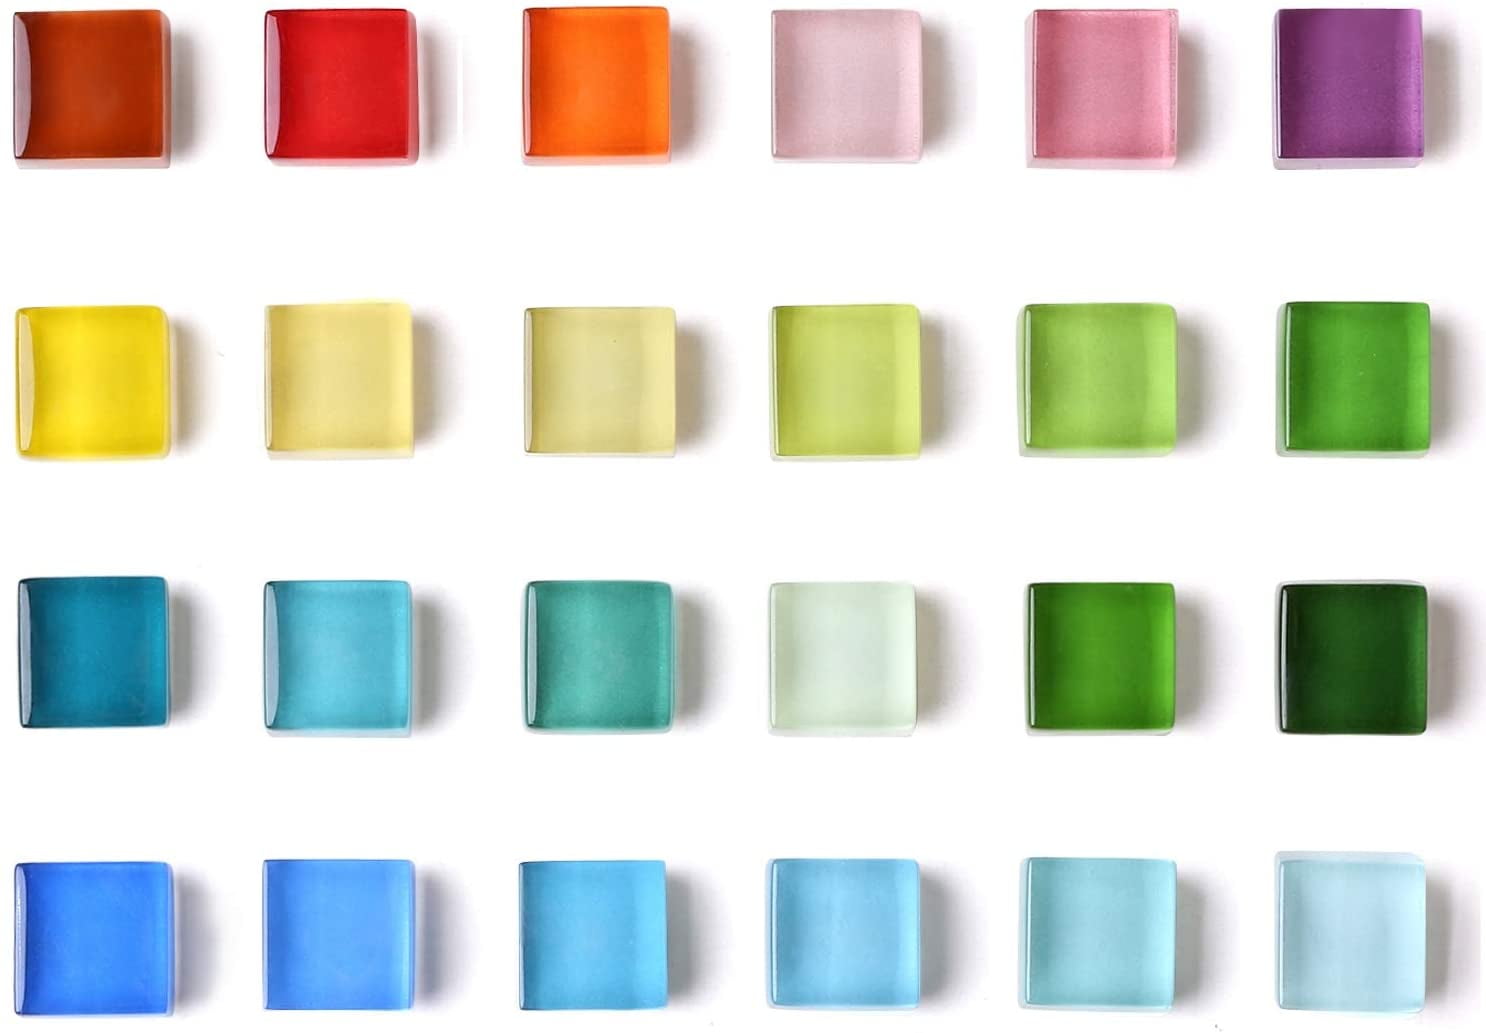 Details about   Joyzy Glass Refrigerator Magnets For Fridge Cute Color Decorative Office Locker 